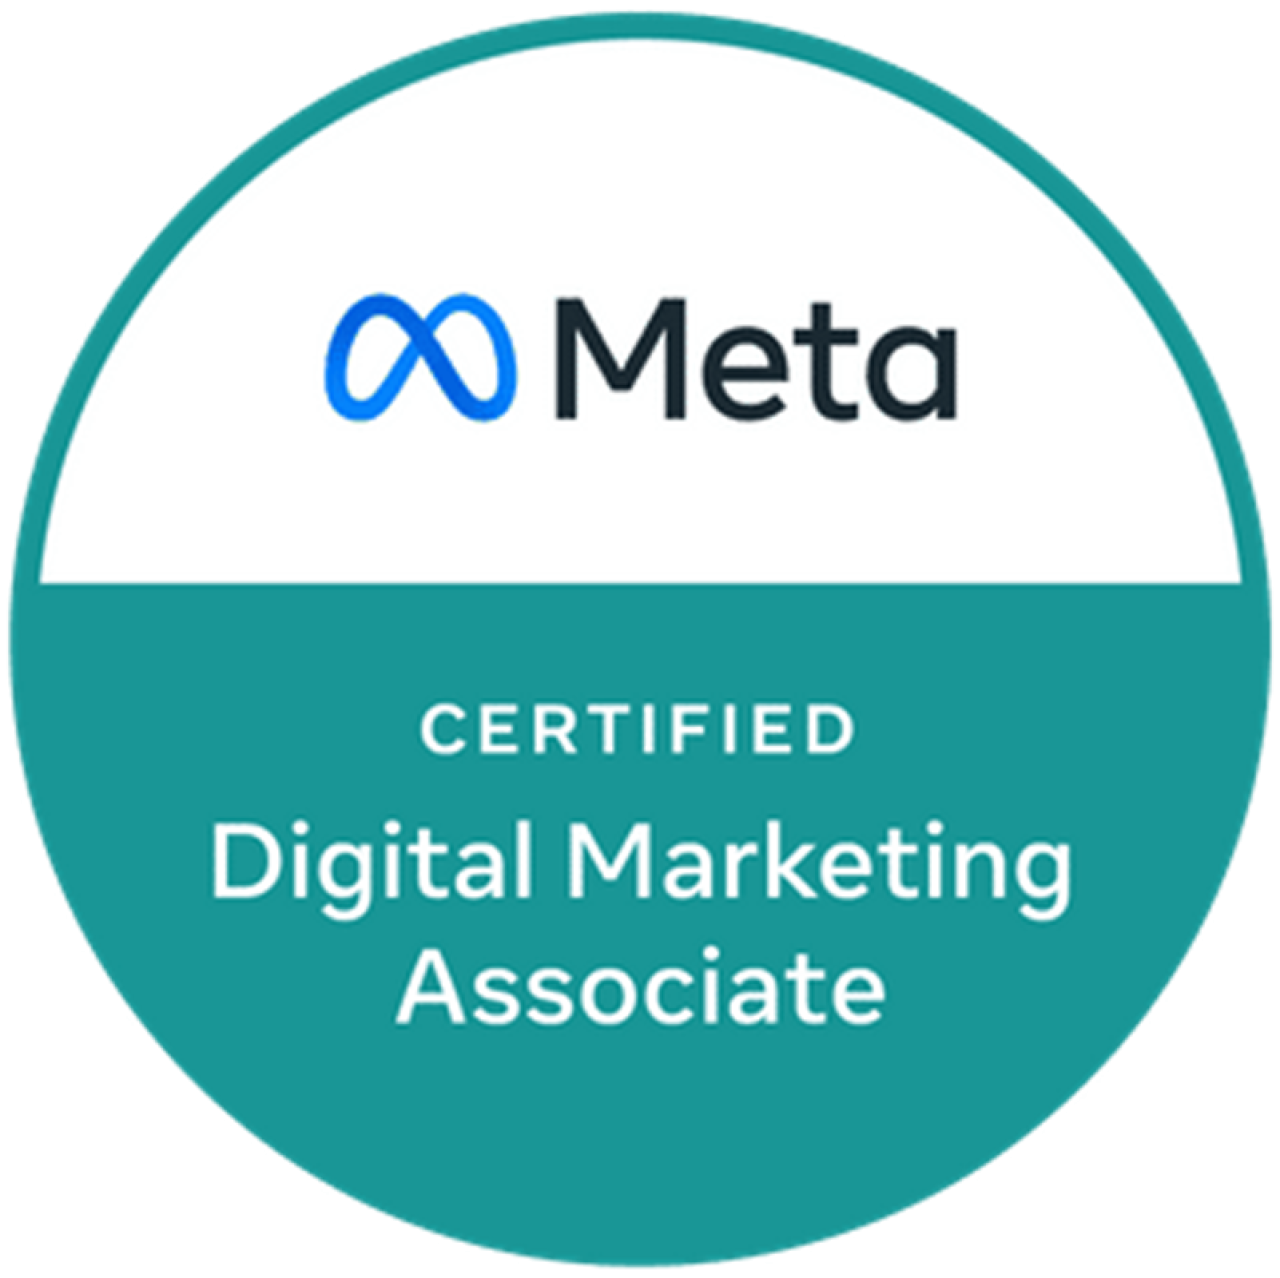 Meta certified Digital Marketing Associate.